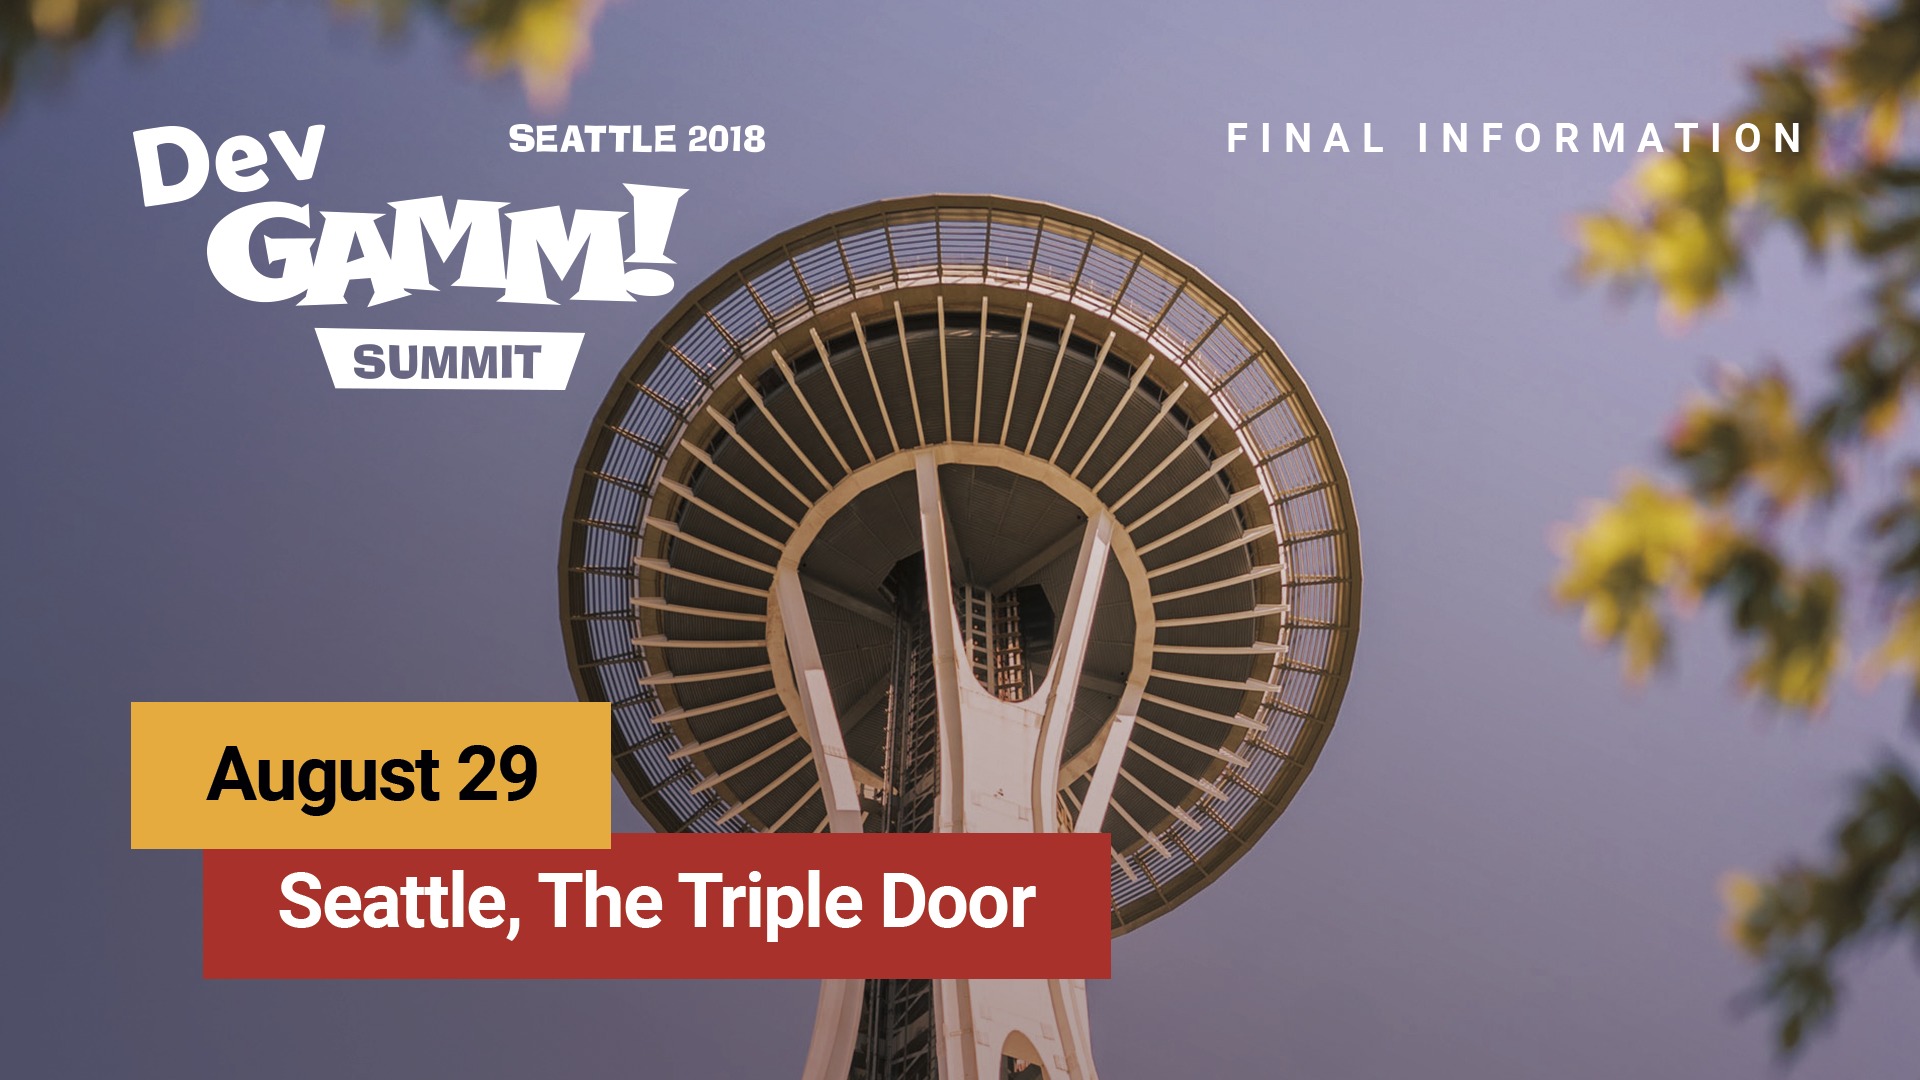 Final Information for DevGAMM Seattle Summit attendees